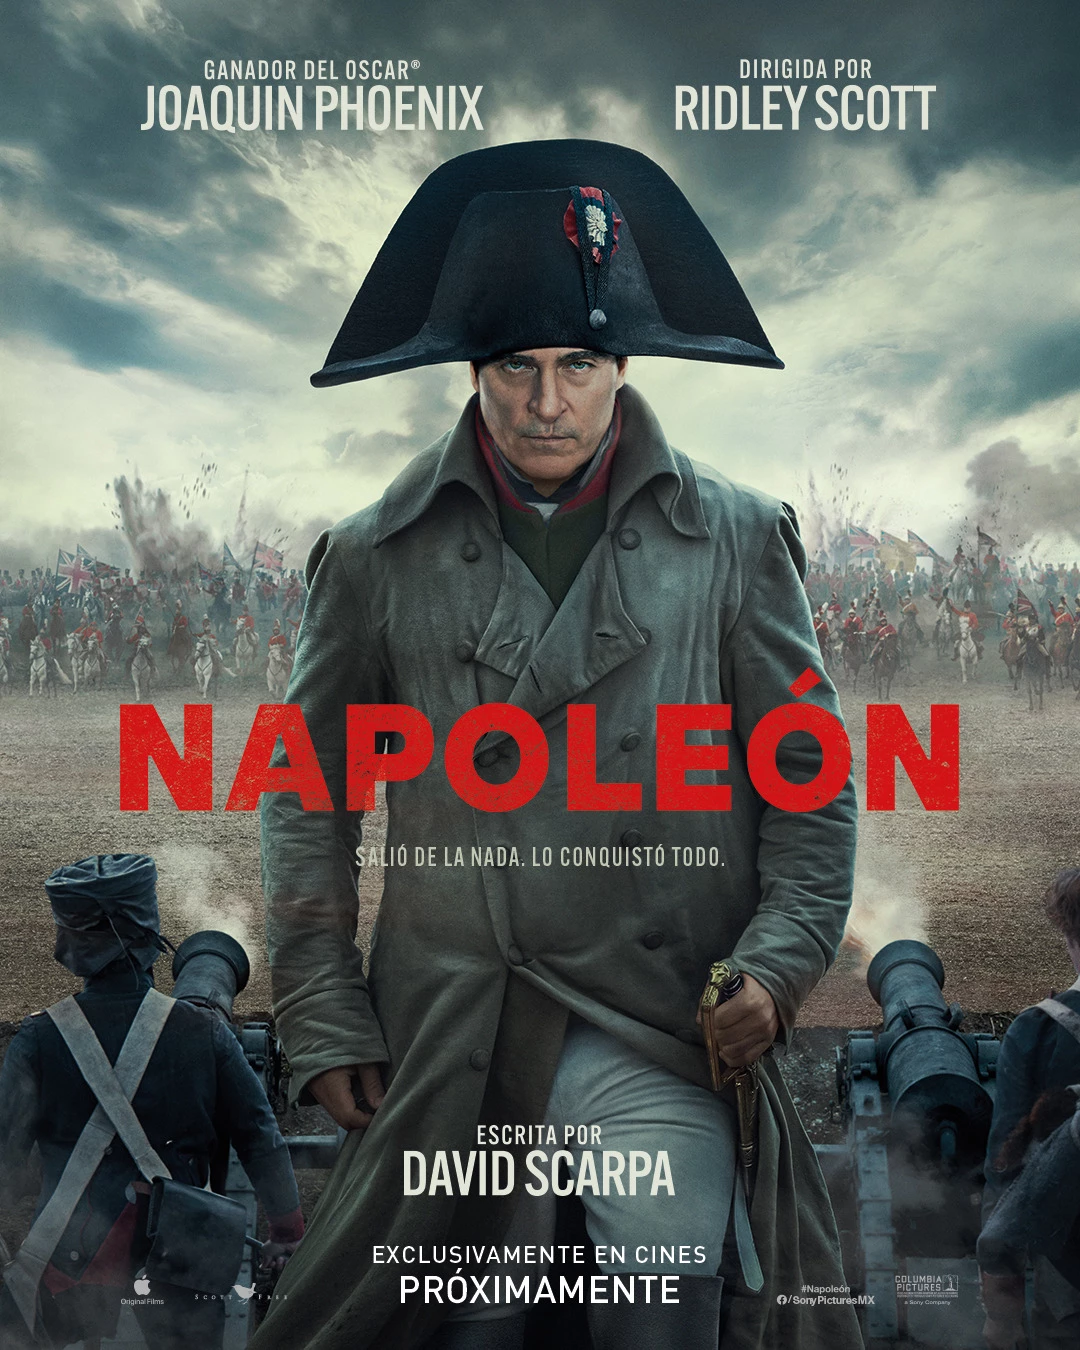 Napoleon movie release date